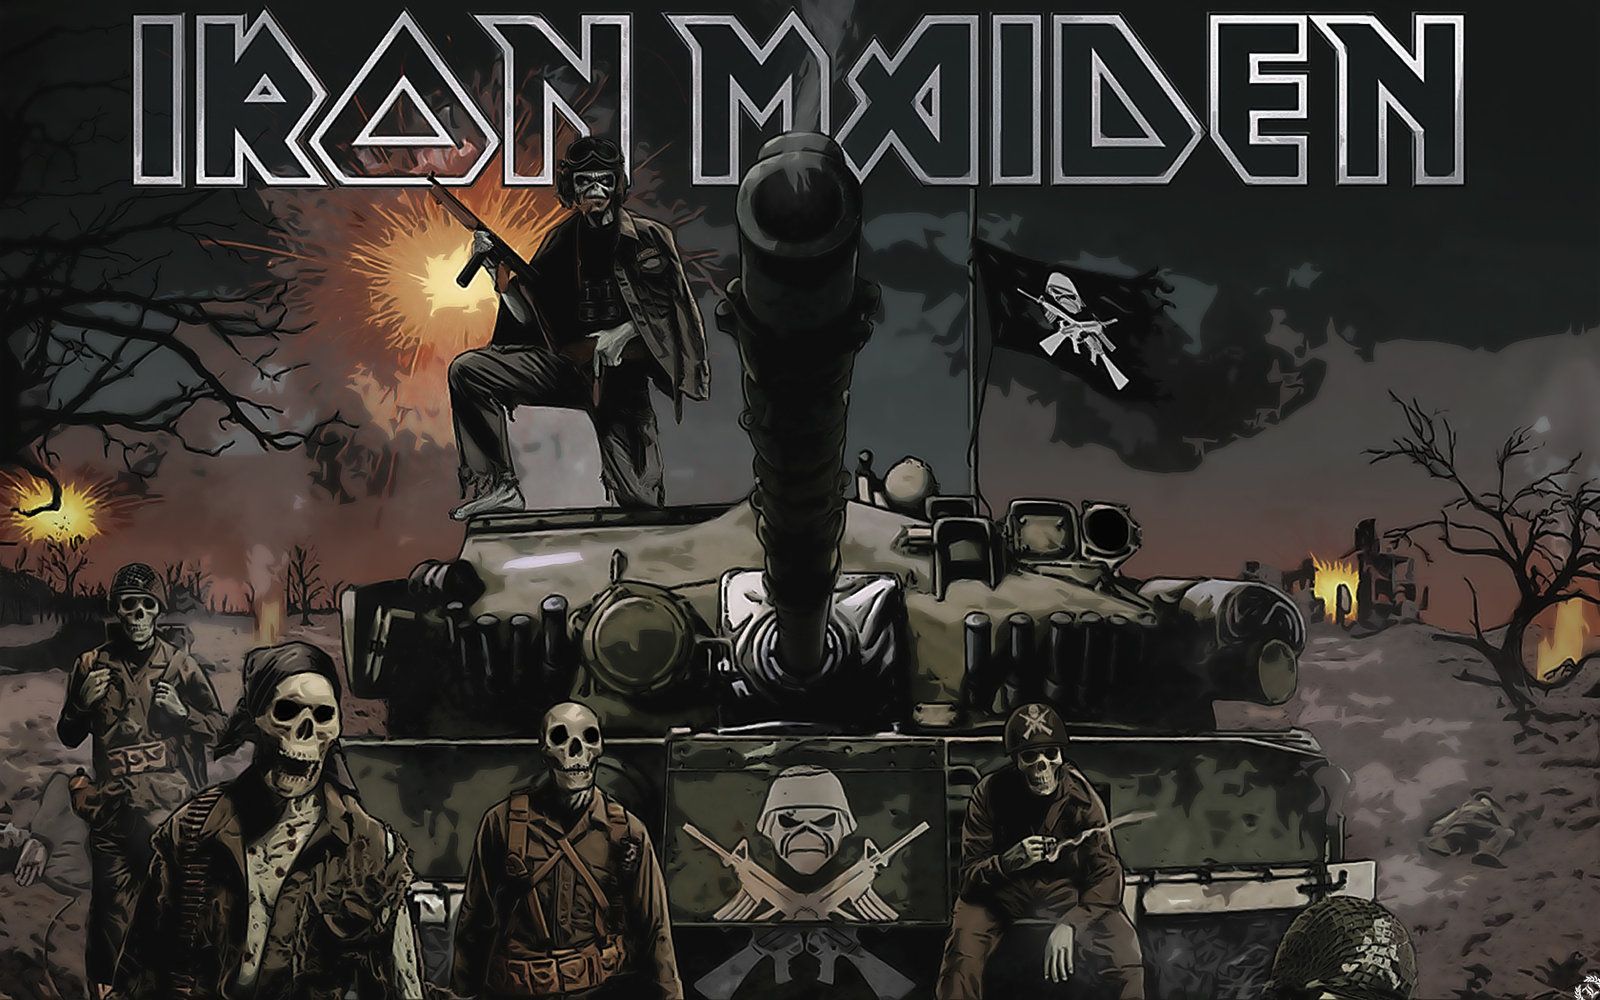 Iron Maiden wallpaper hd free download